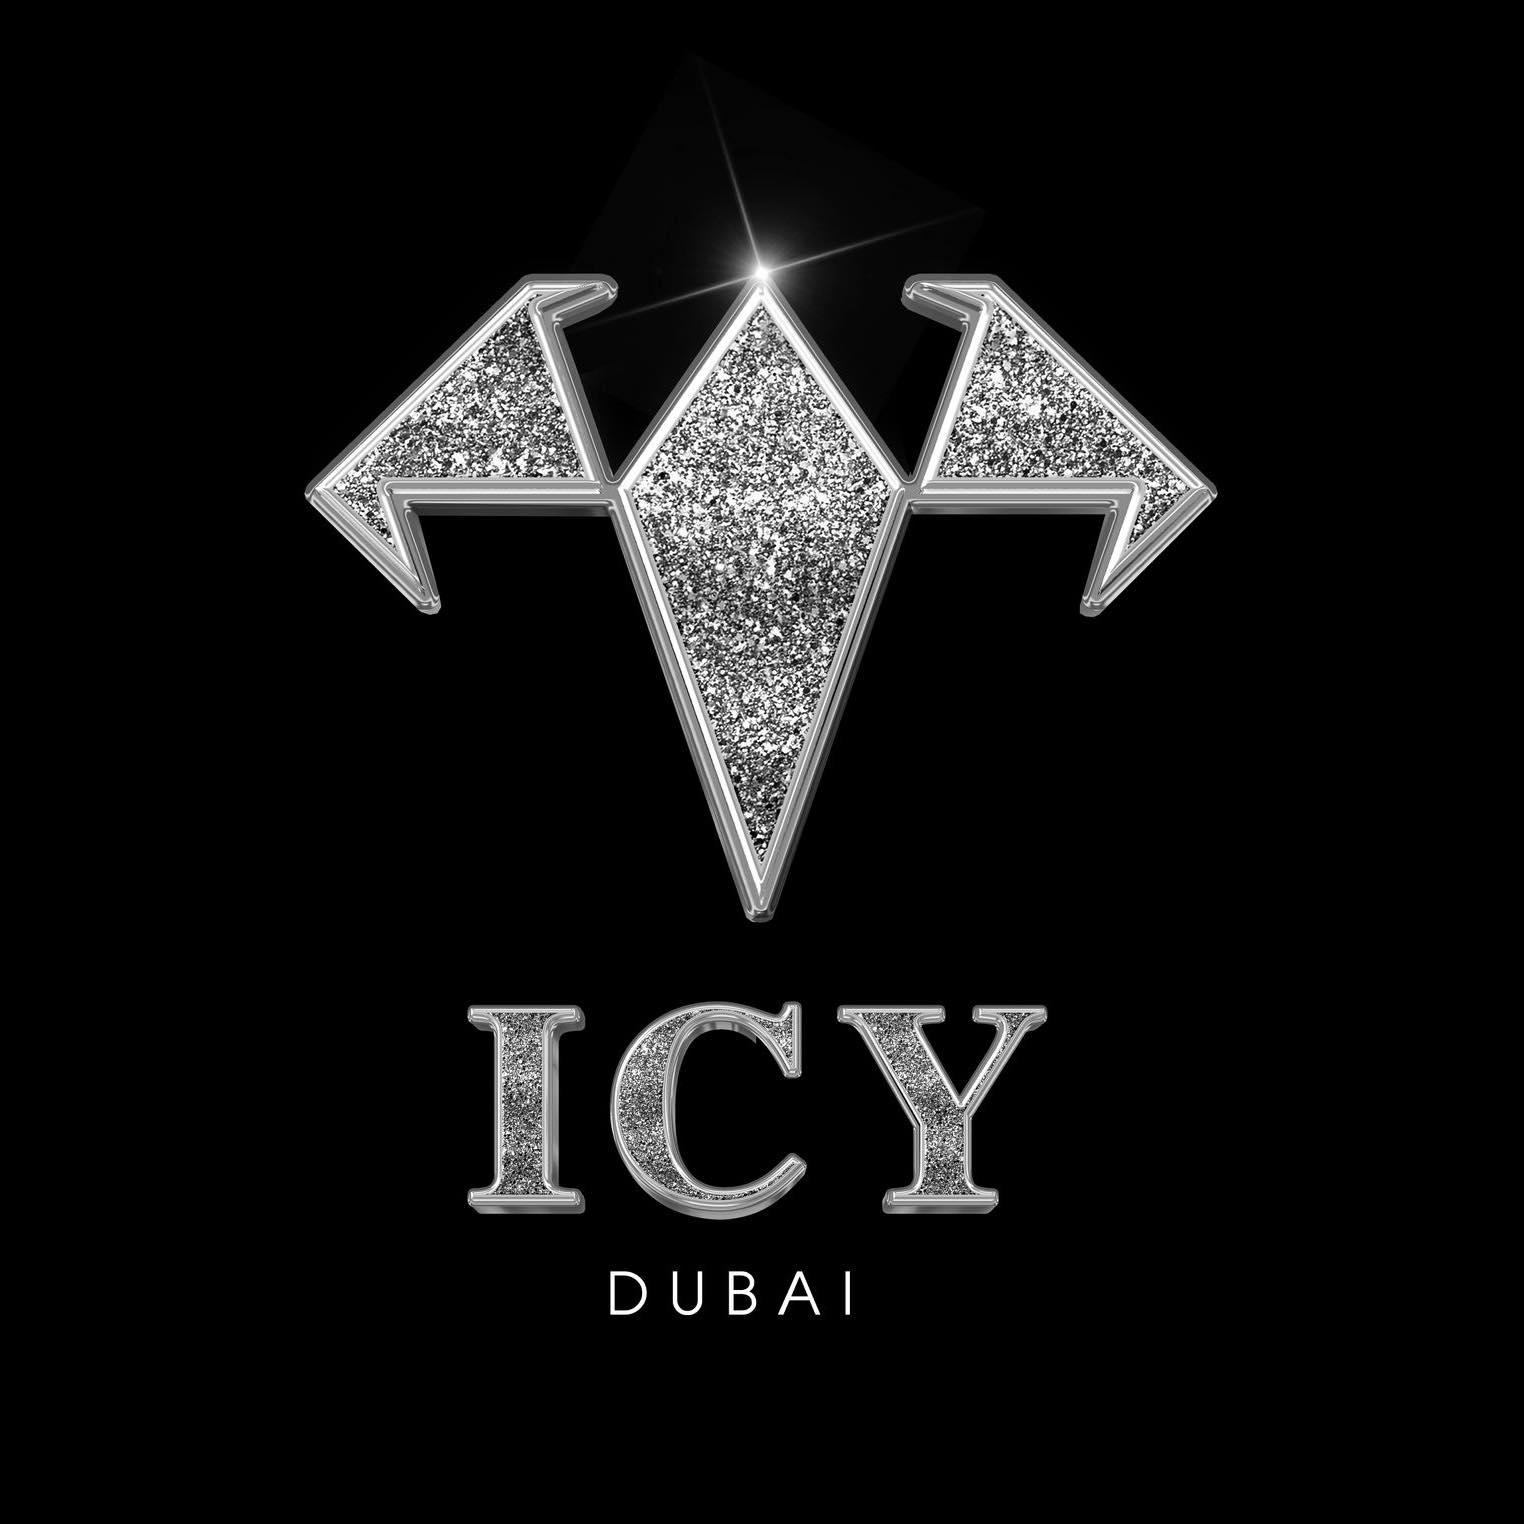 Icy Dubai